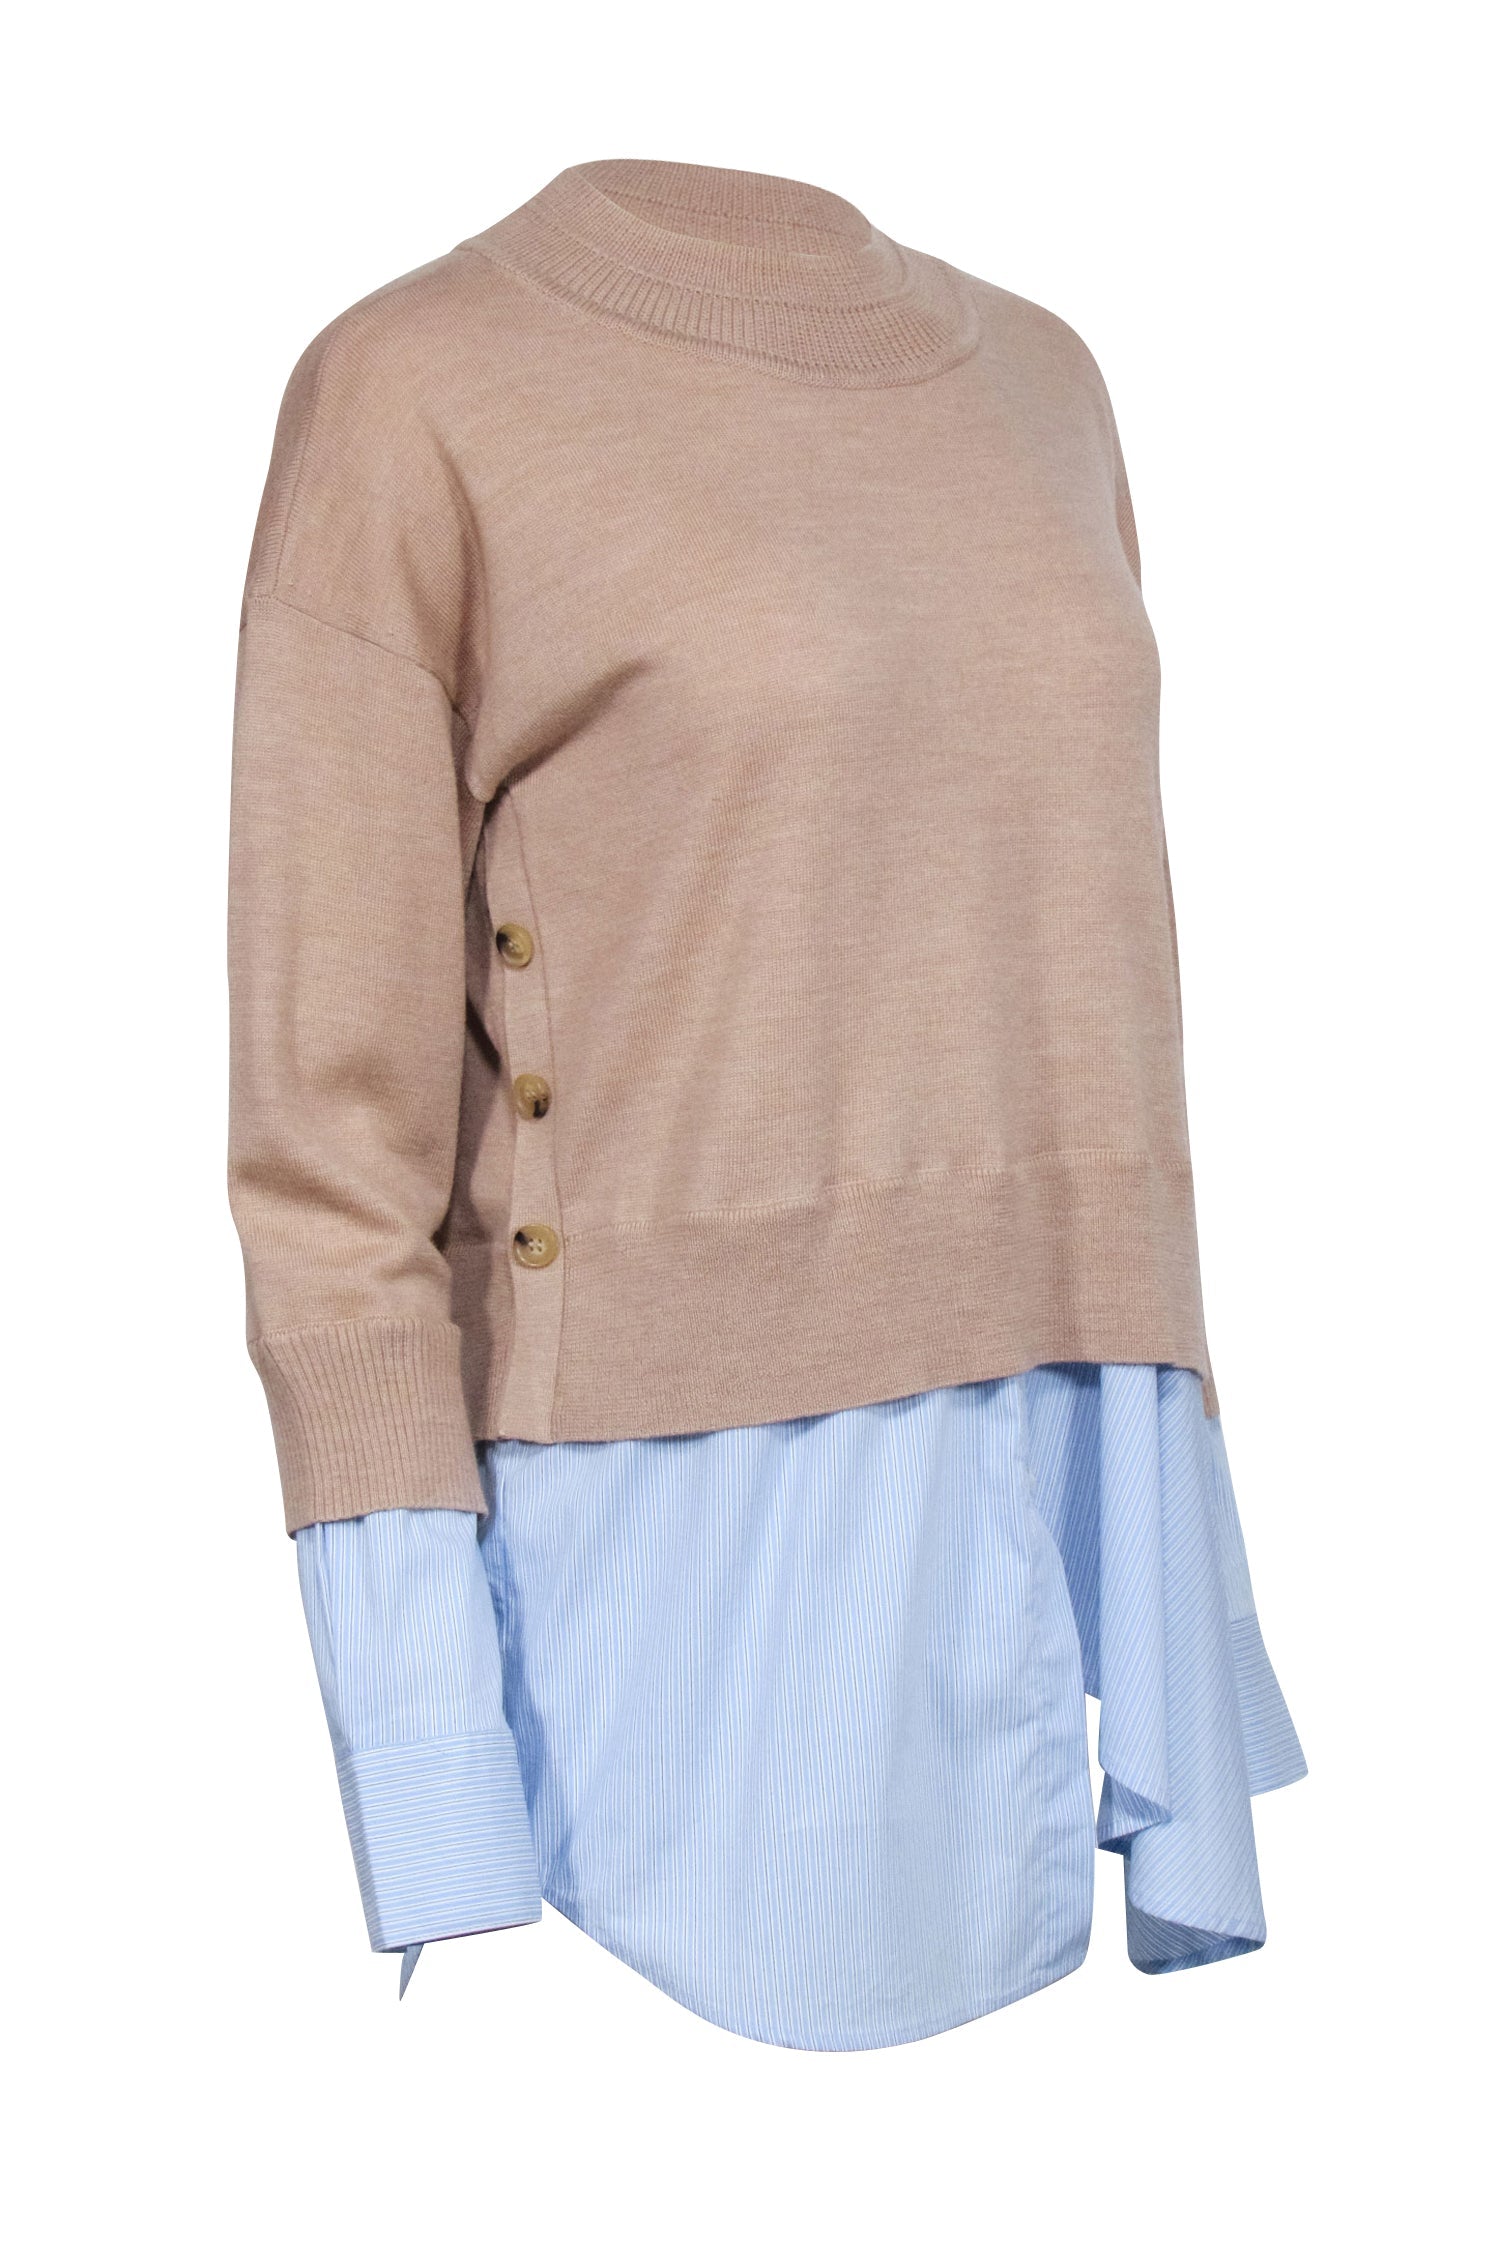 Veronica Beard - Beige Wool Sweater w/ Striped Shirting Sz M